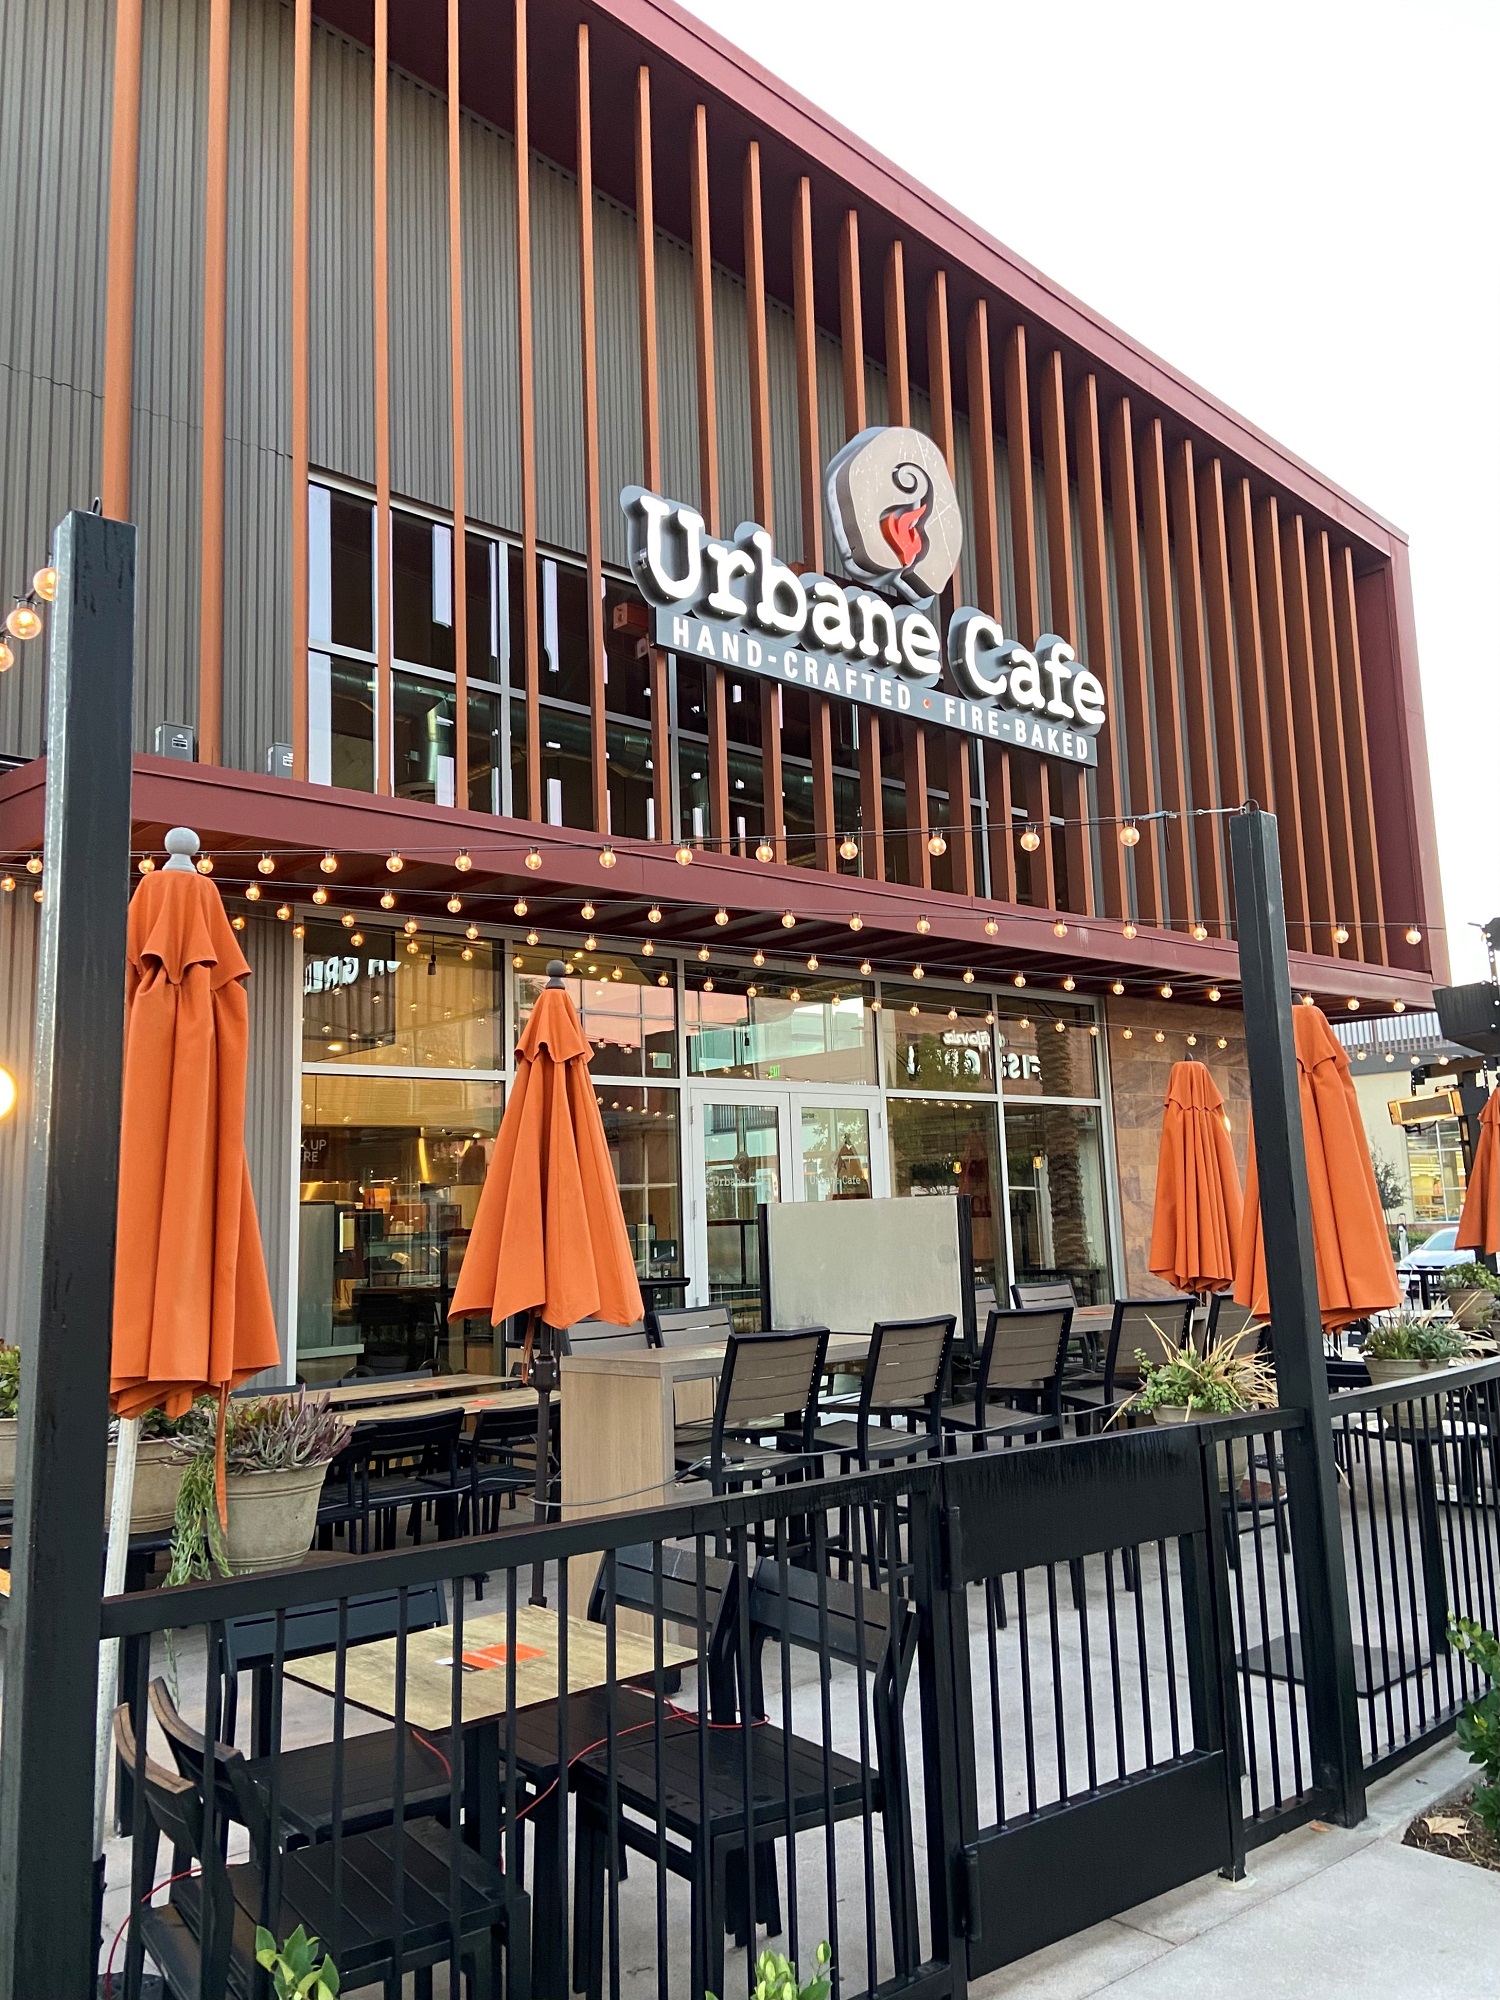 Urbane Cafe North Hollywood